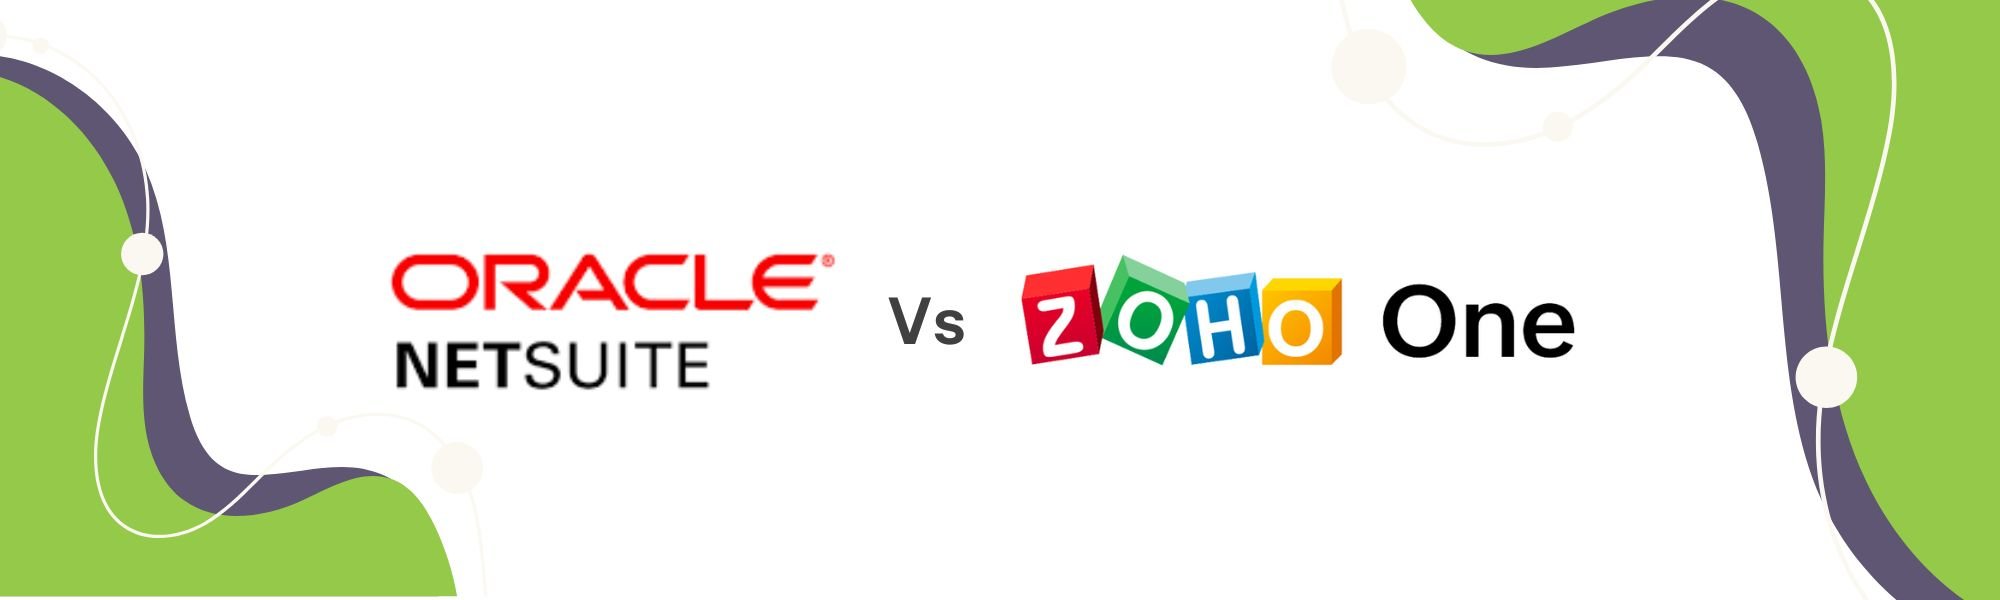 Oracle NetSuite logo vs zoho one logo